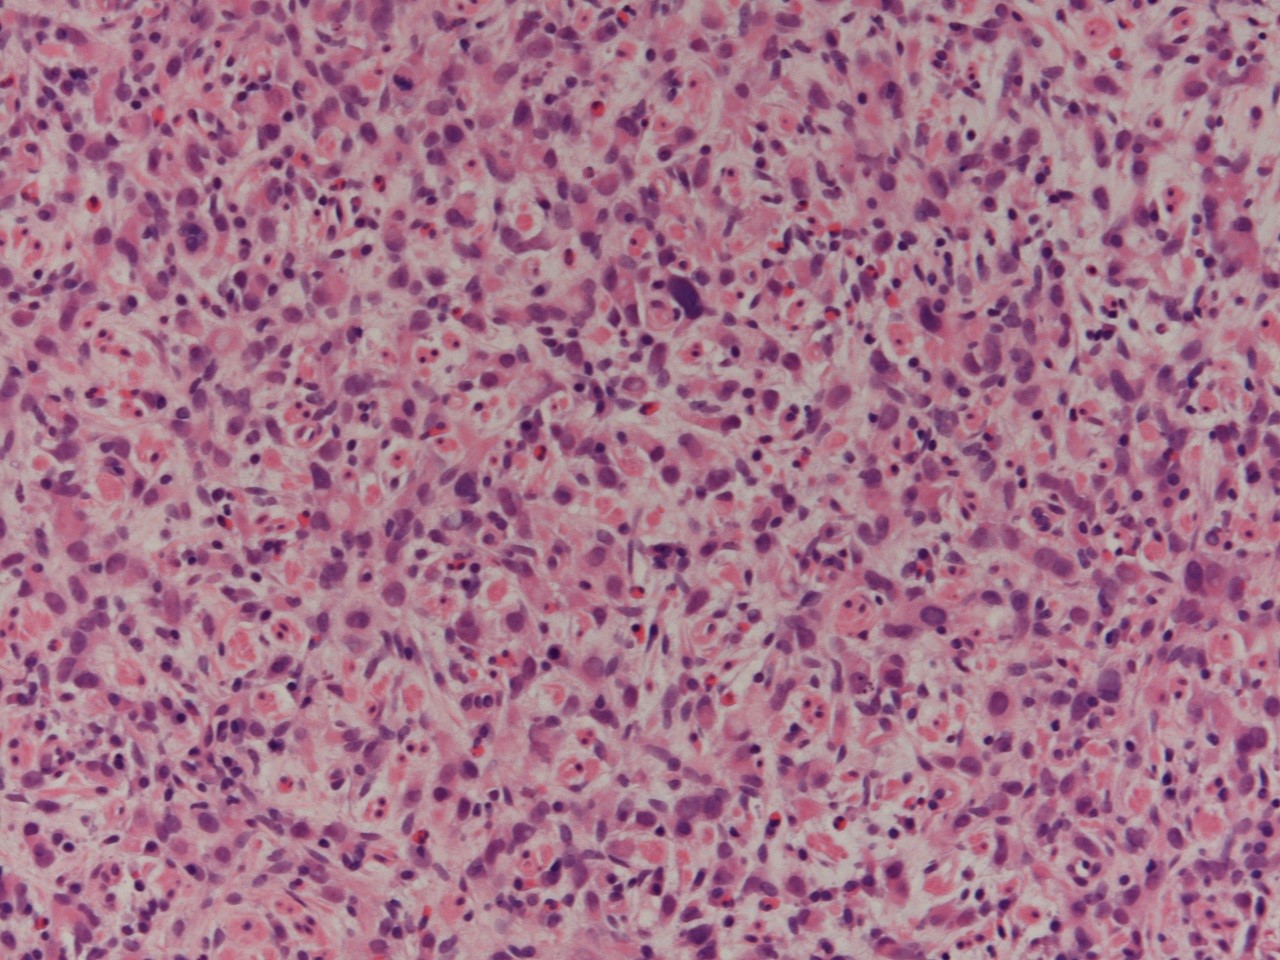 Signet ring cell adenocarcinoma